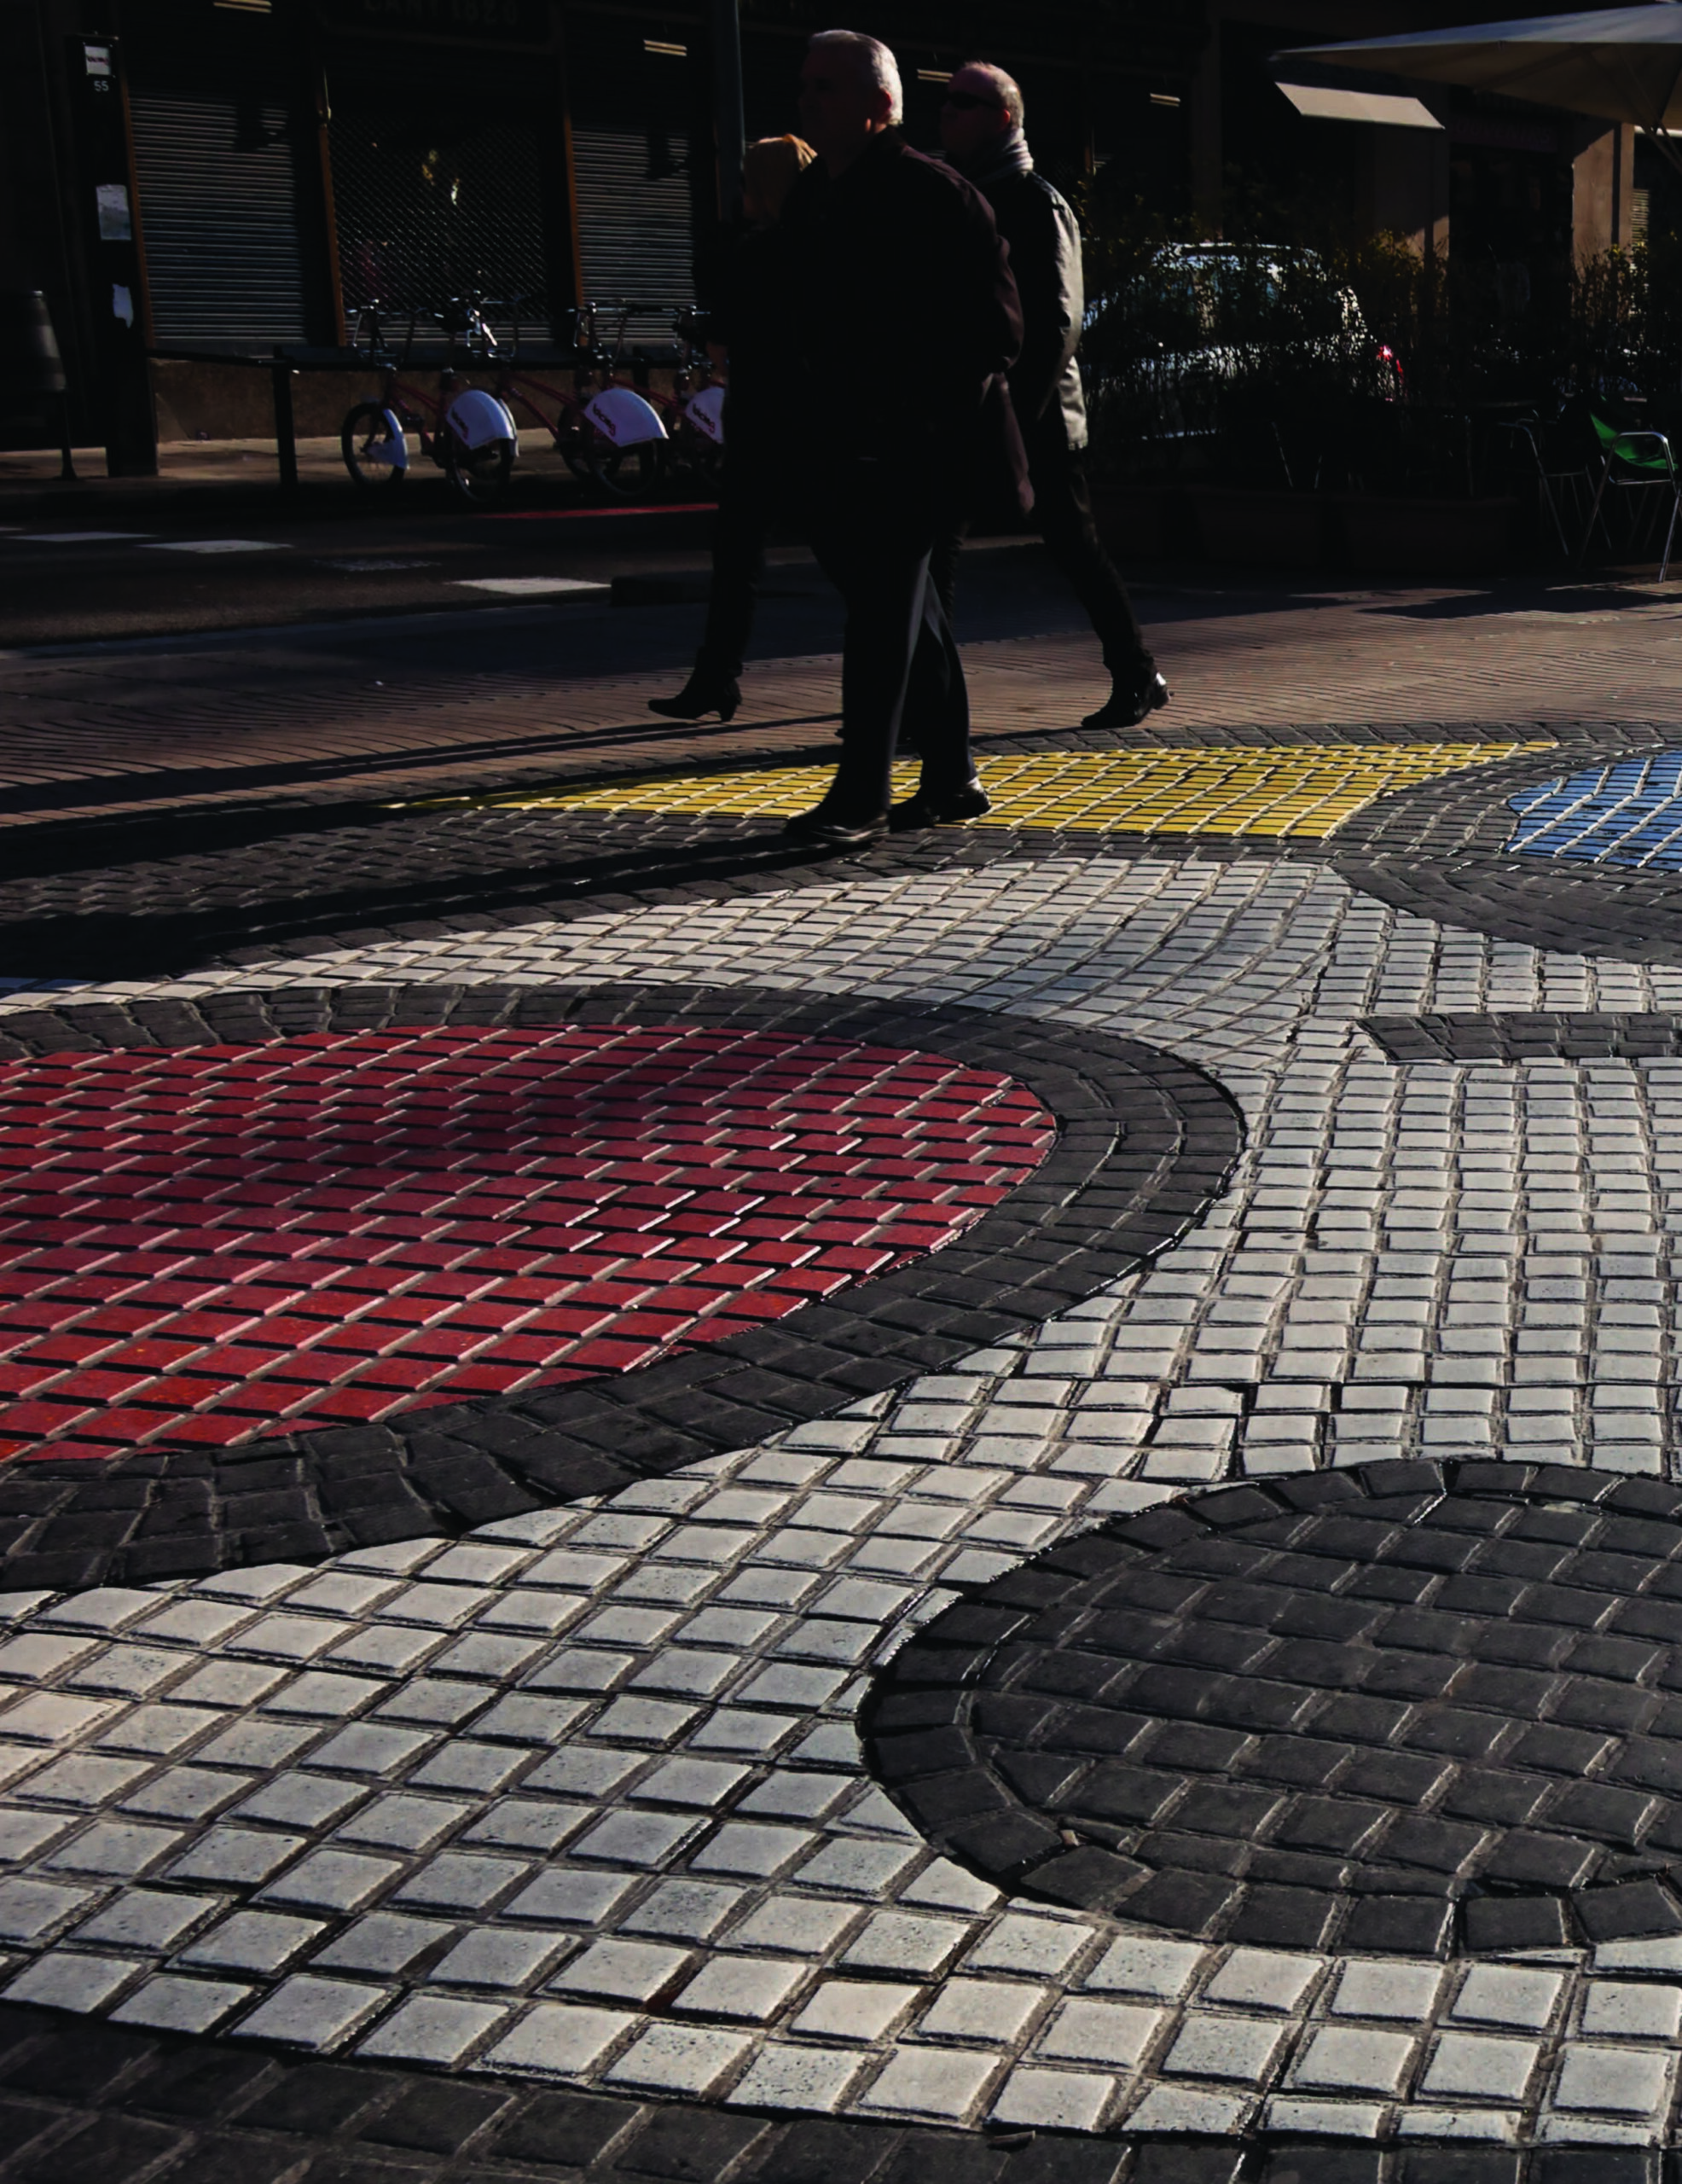 Photograph: Pavement mosaic by Joan Miró (1971), La Rambla, Barcelona.